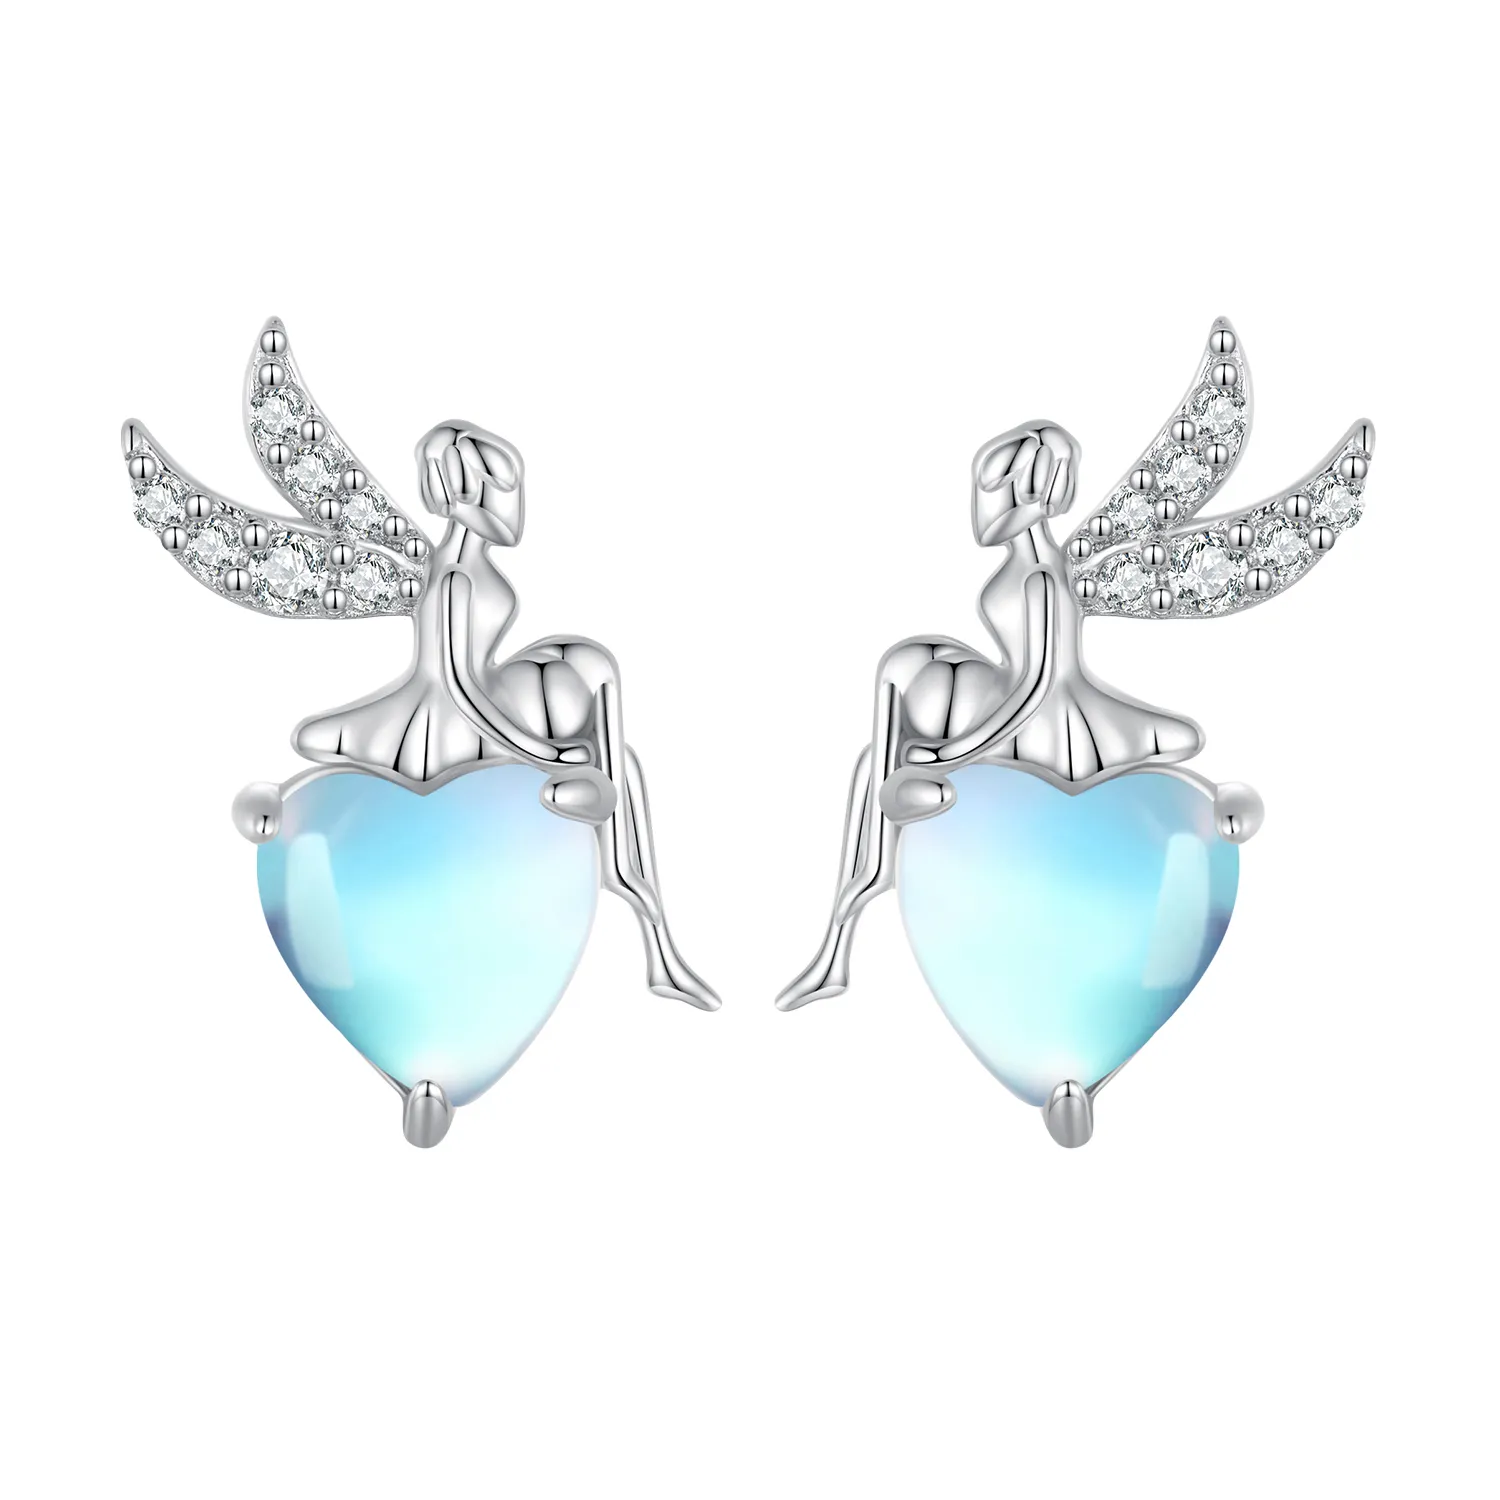 Pandora Style Elf Studs Earrings - BSE796